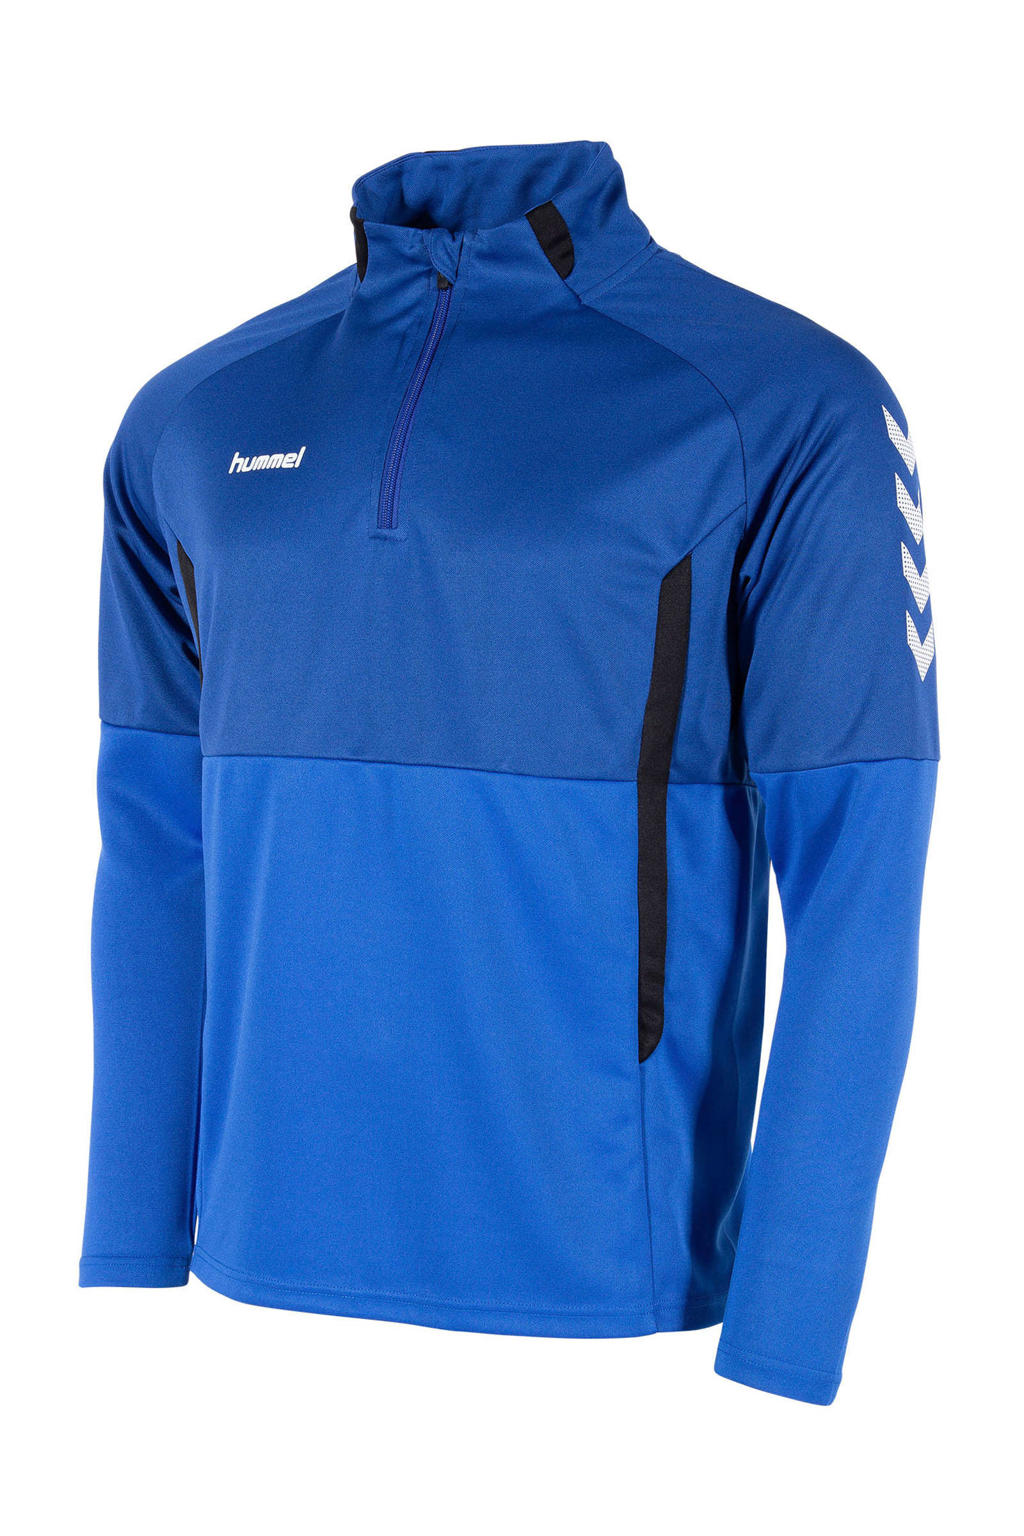 hummel Junior  sportsweater Authentic 1/4 Zip kobaltblauw/zwart